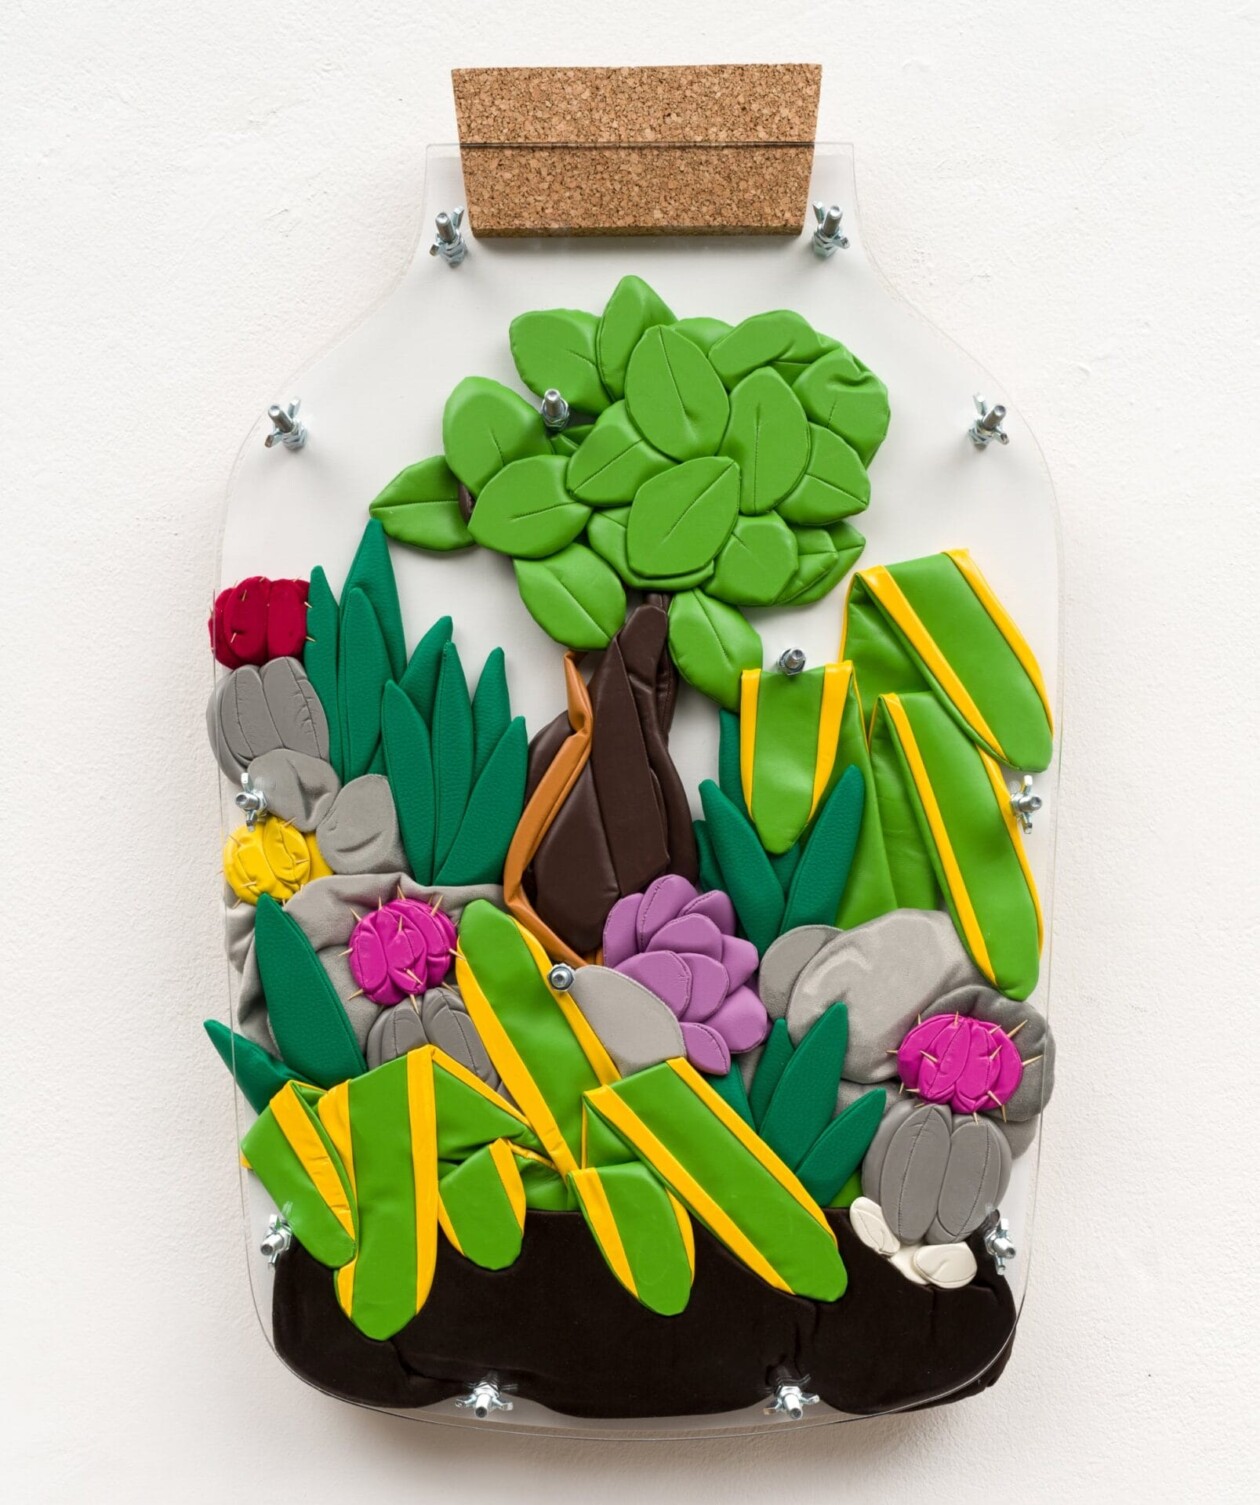 Claustrophobic, Acrylic Pressed Textile Plant Sculptures By Ant Hamlyn (10)